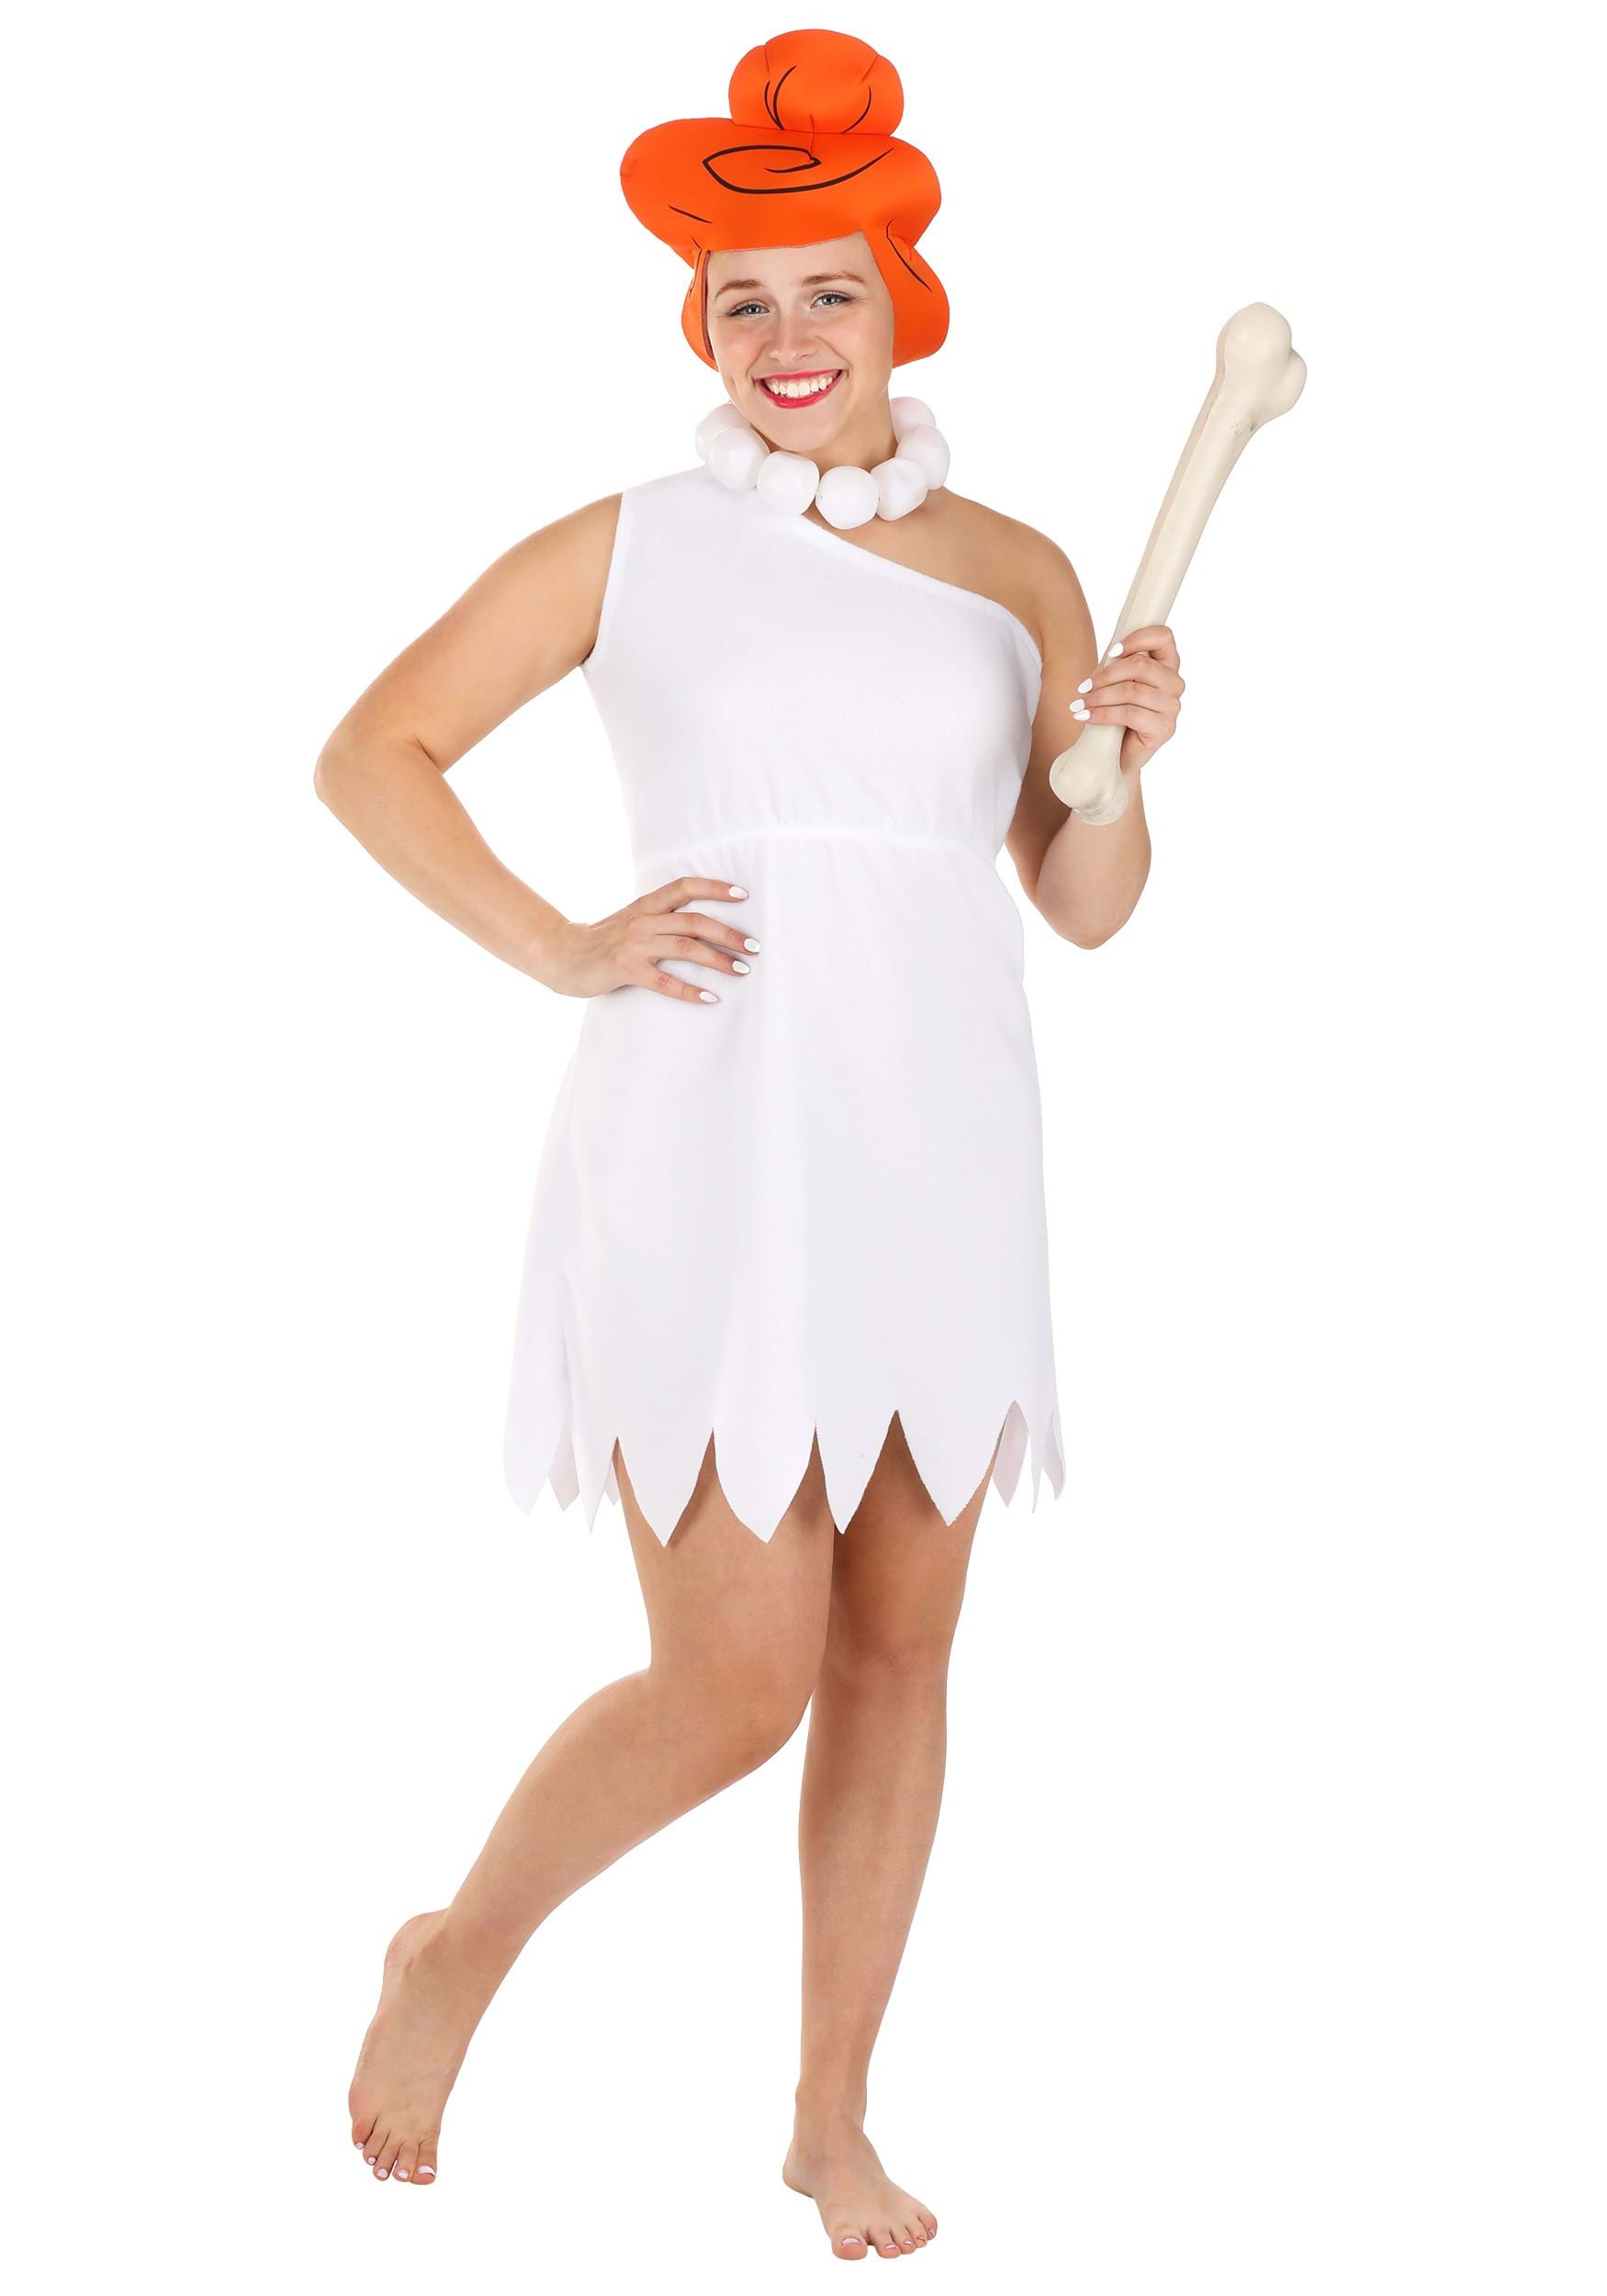 Wilma Flintstone Adult Costume for Women